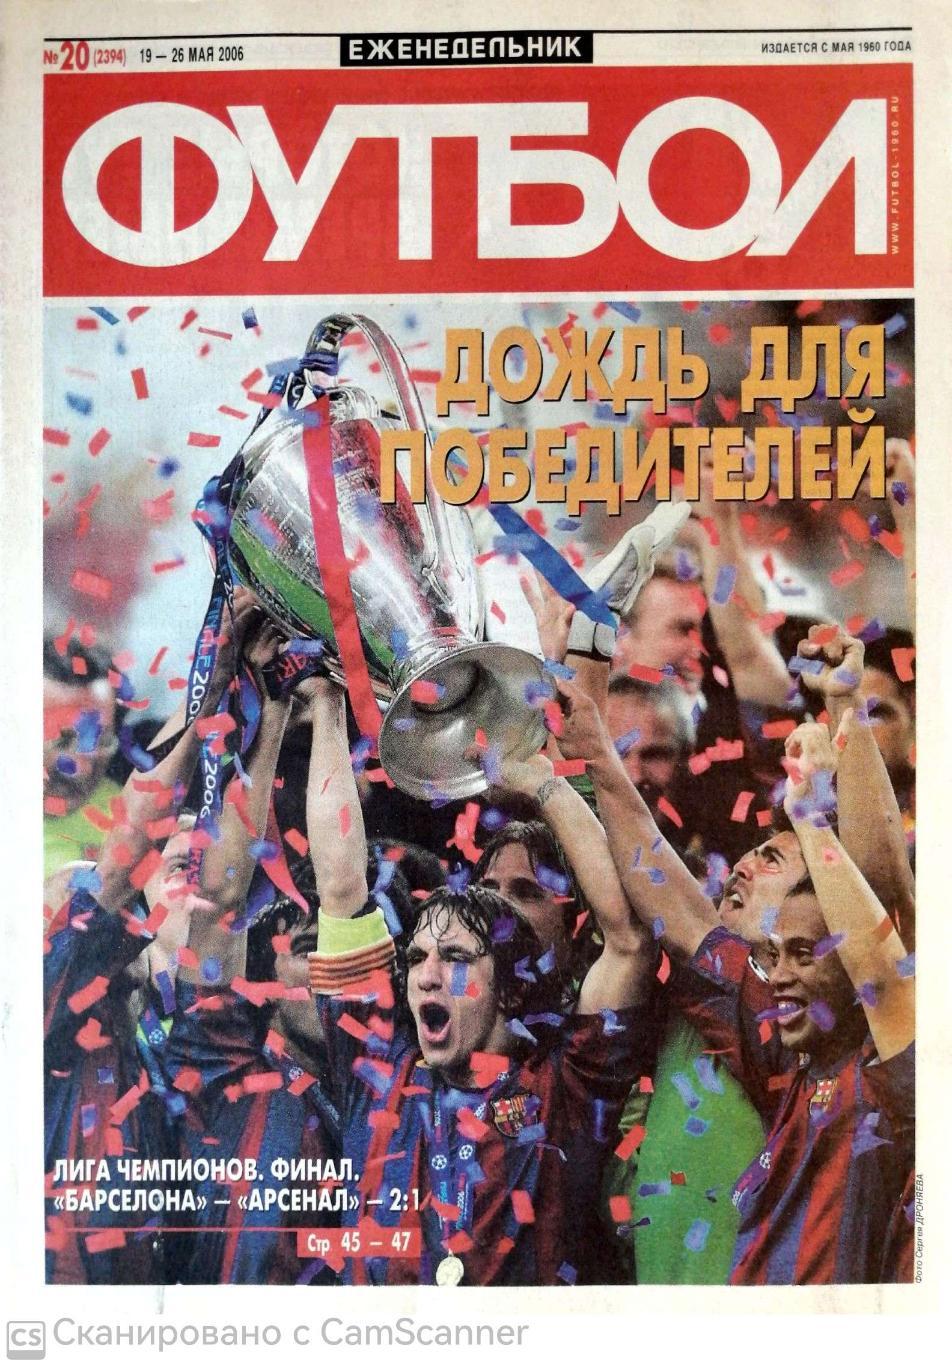 Еженедельник «Футбол» (Москва). 2006 год. №20